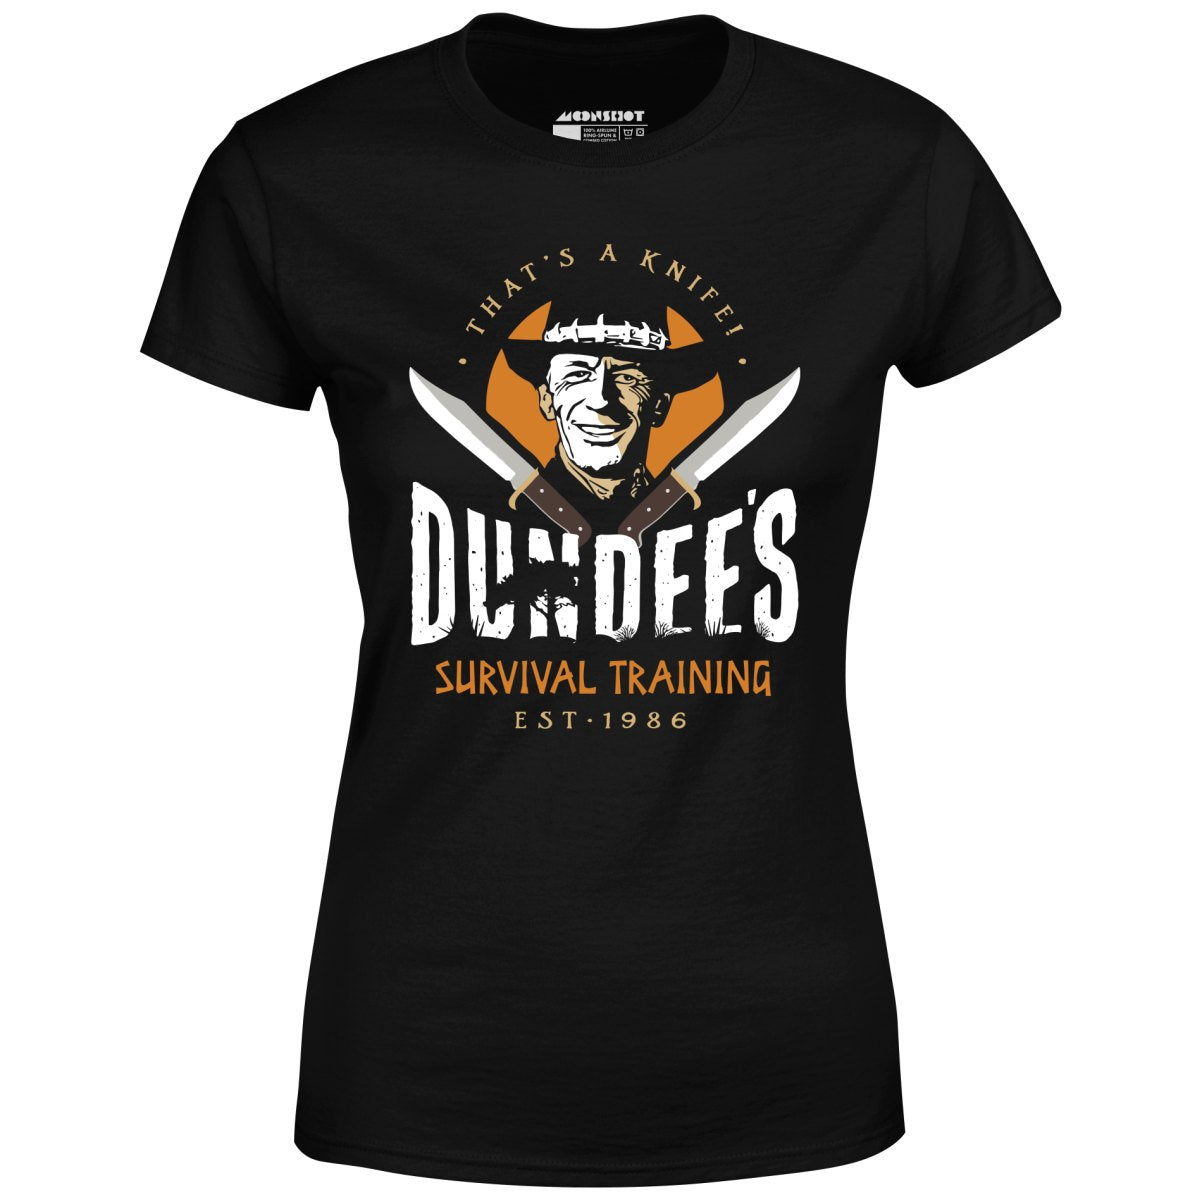 Dundee's Survival Training - Women's T-Shirt